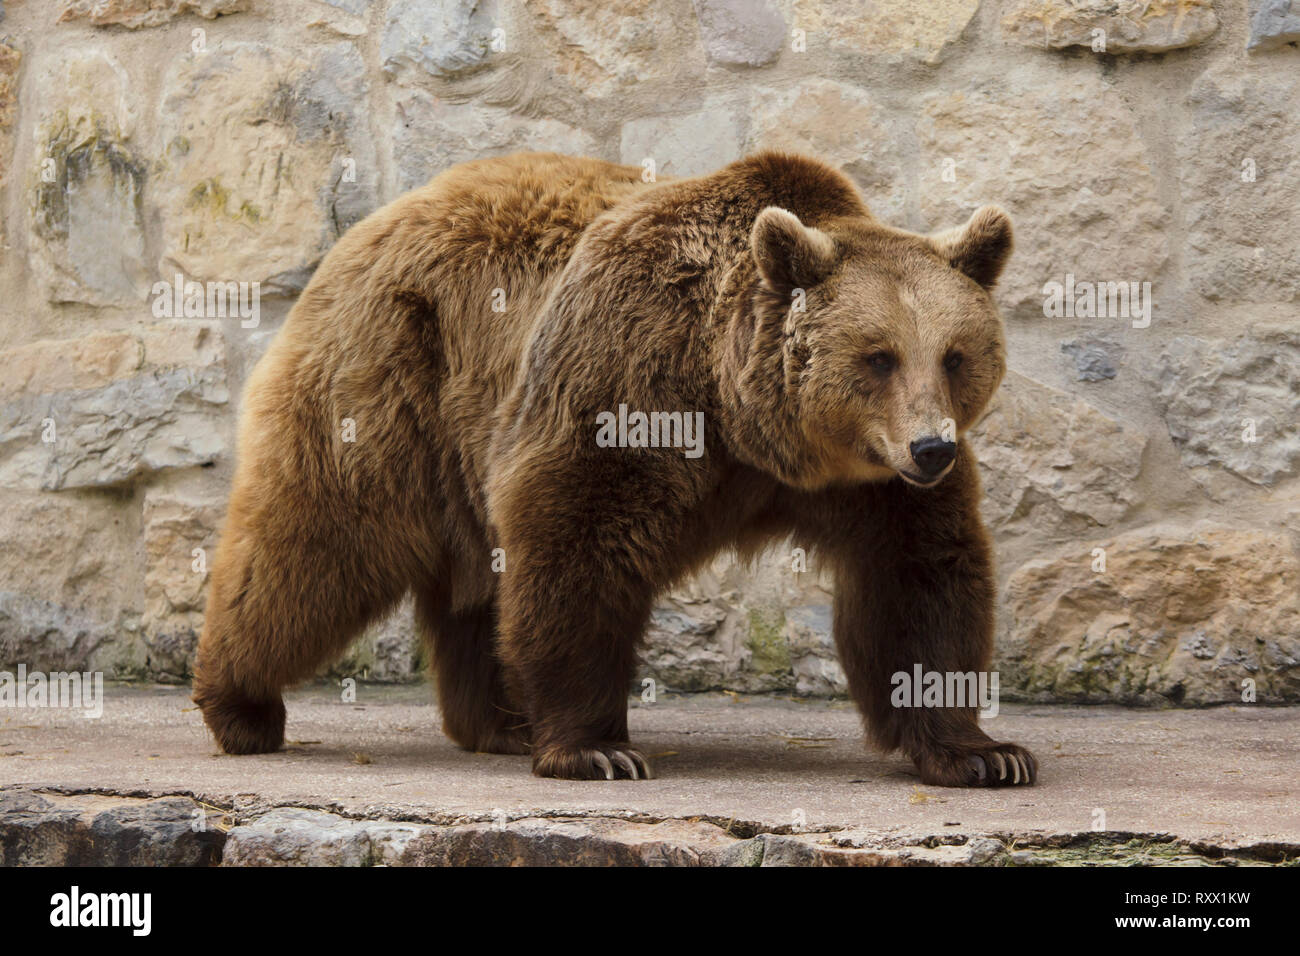 Brown bear (Ursus arctos) at Lisbon Zoo (Jardim Zoológico de Lisboa) in Lisbon, Portugal. Stock Photo